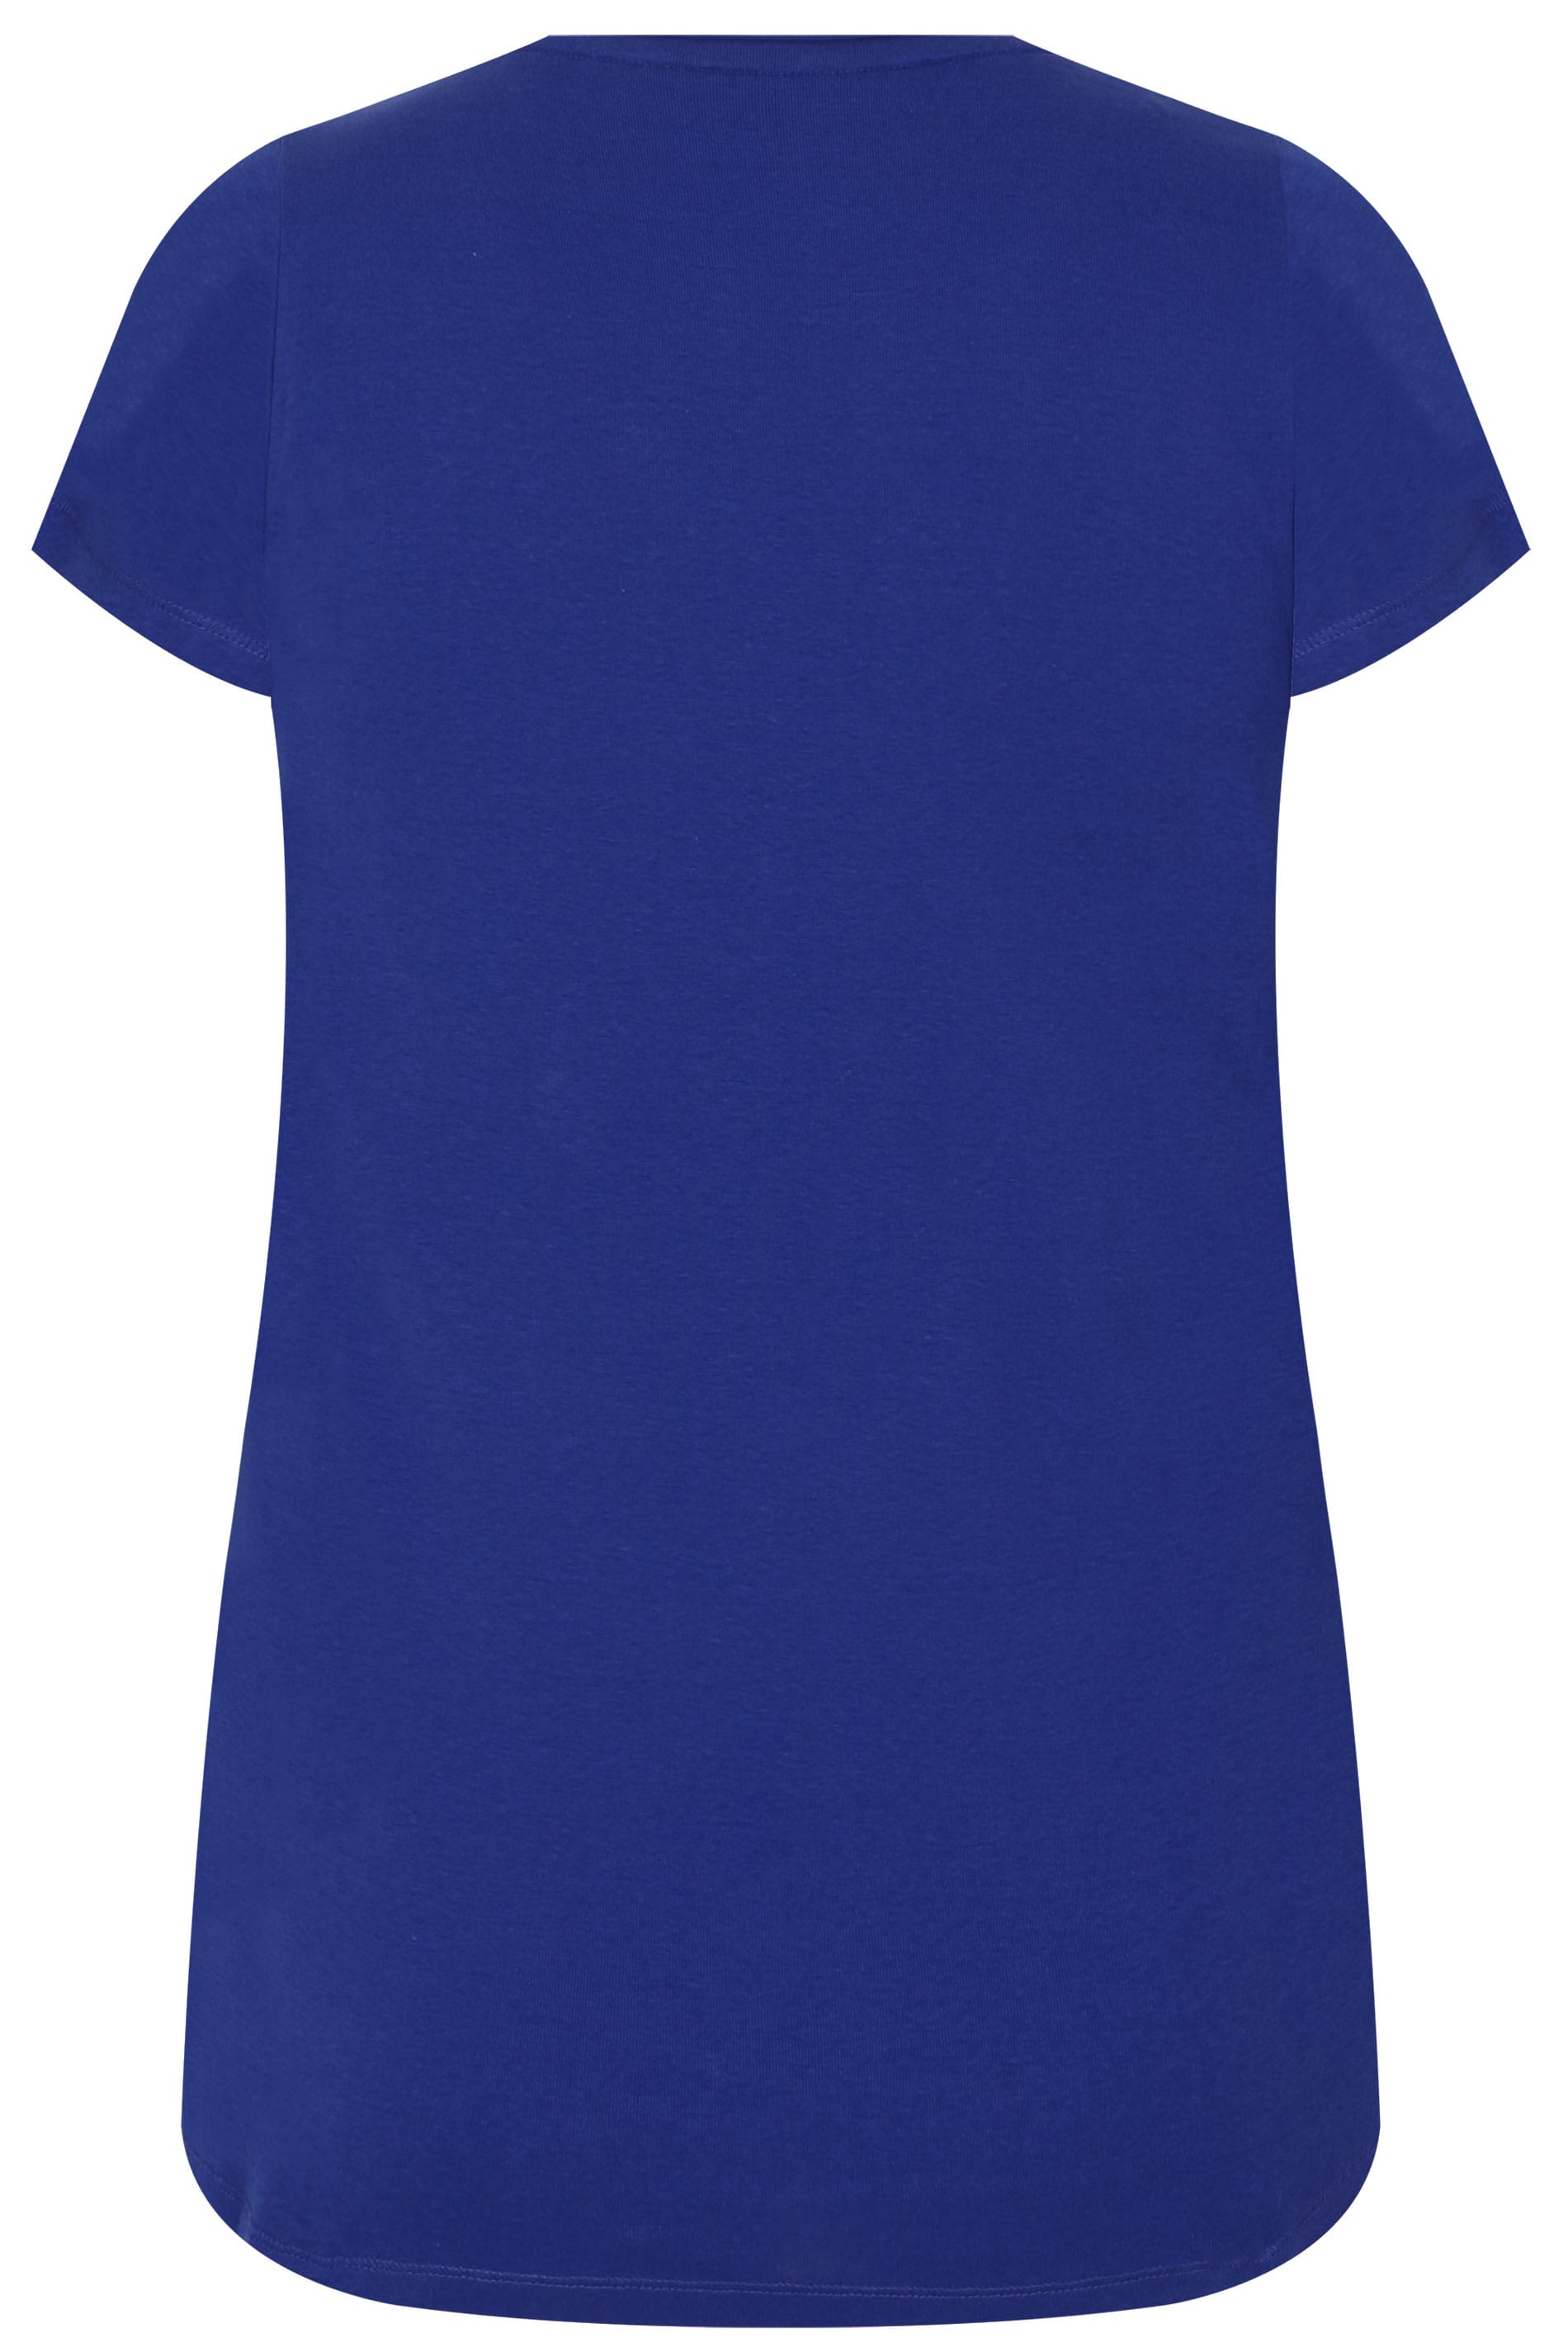 Cobalt Blue Basic V-Neck T-Shirt, plus size 16 to 36